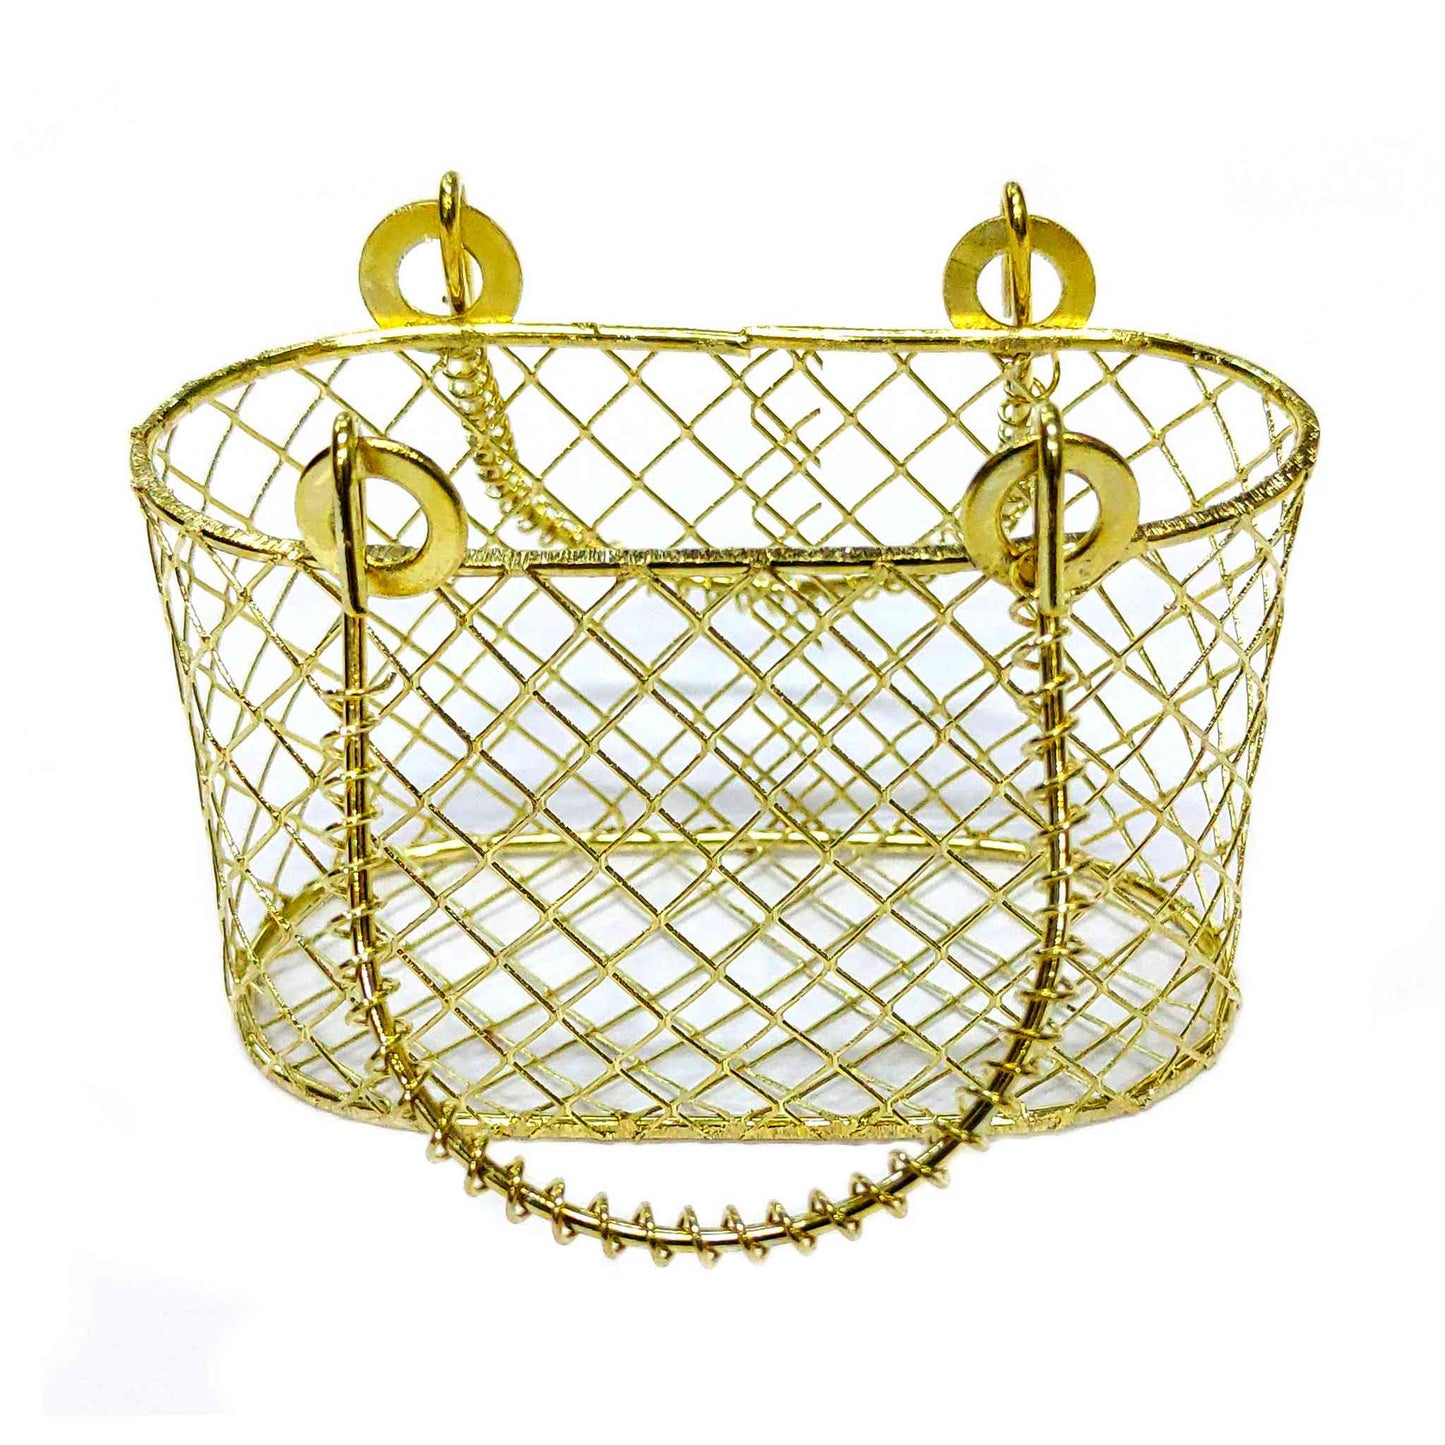 Beautiful Metal Basket for DIY Craft or Decoration, Tea Light Holder Lamp Cage, Goldenrod - Indian Petals